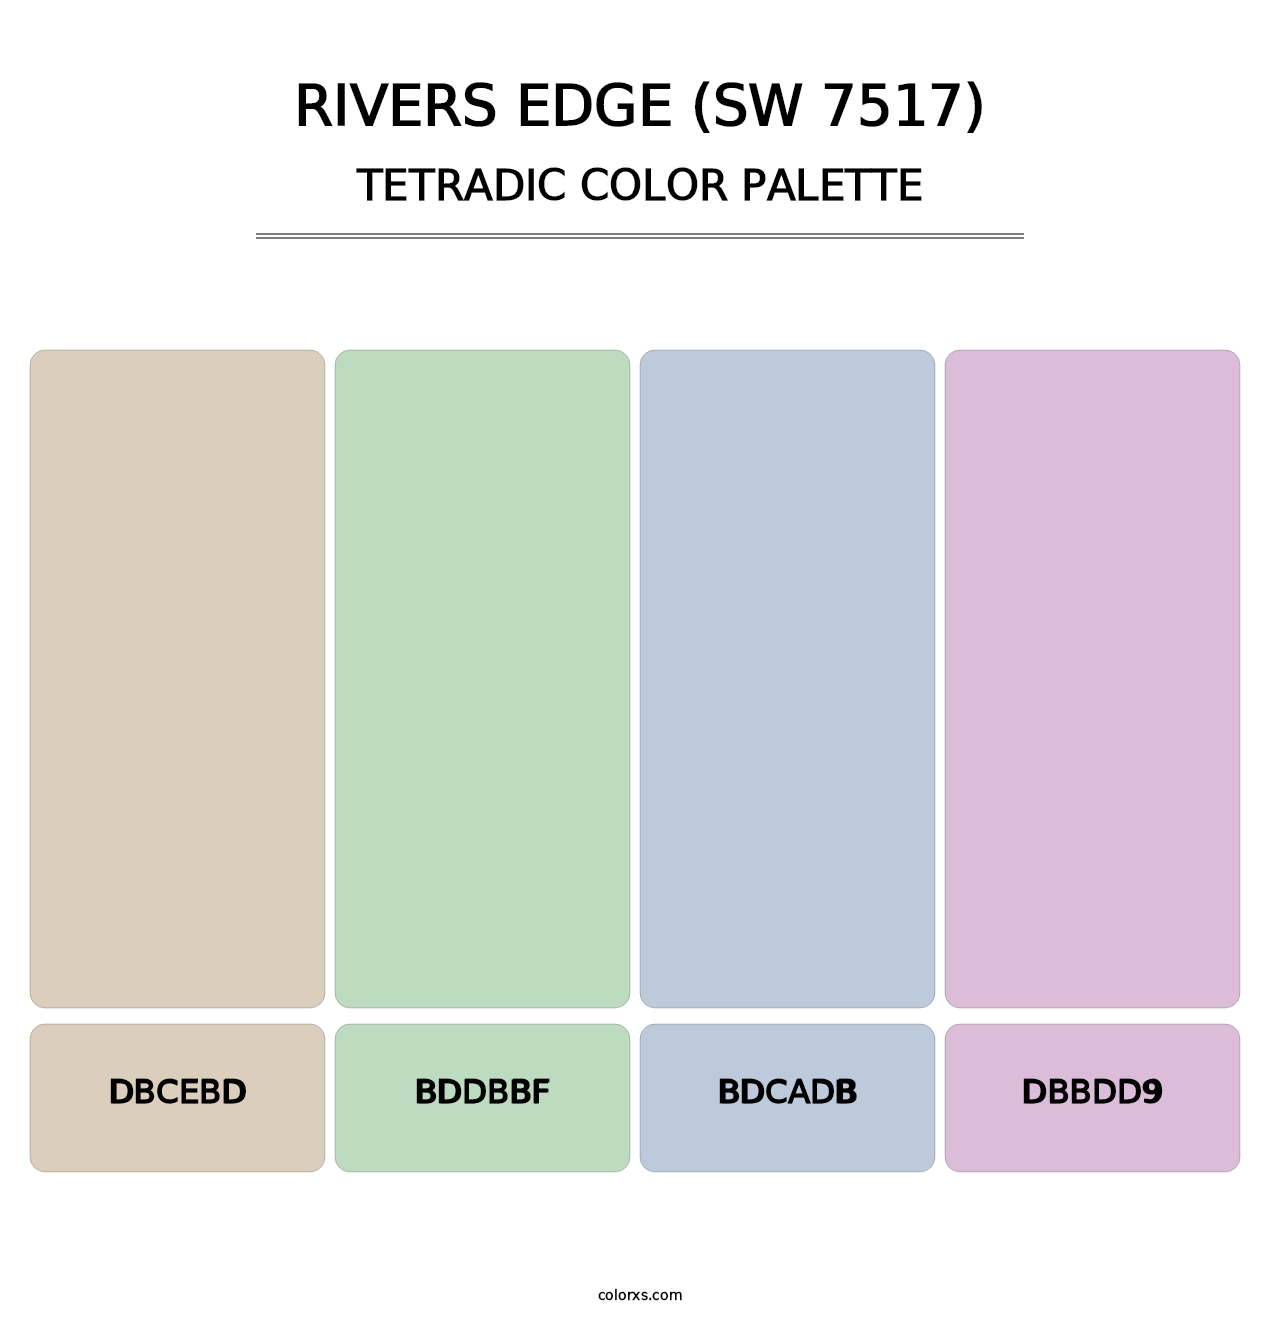 Rivers Edge (SW 7517) - Tetradic Color Palette